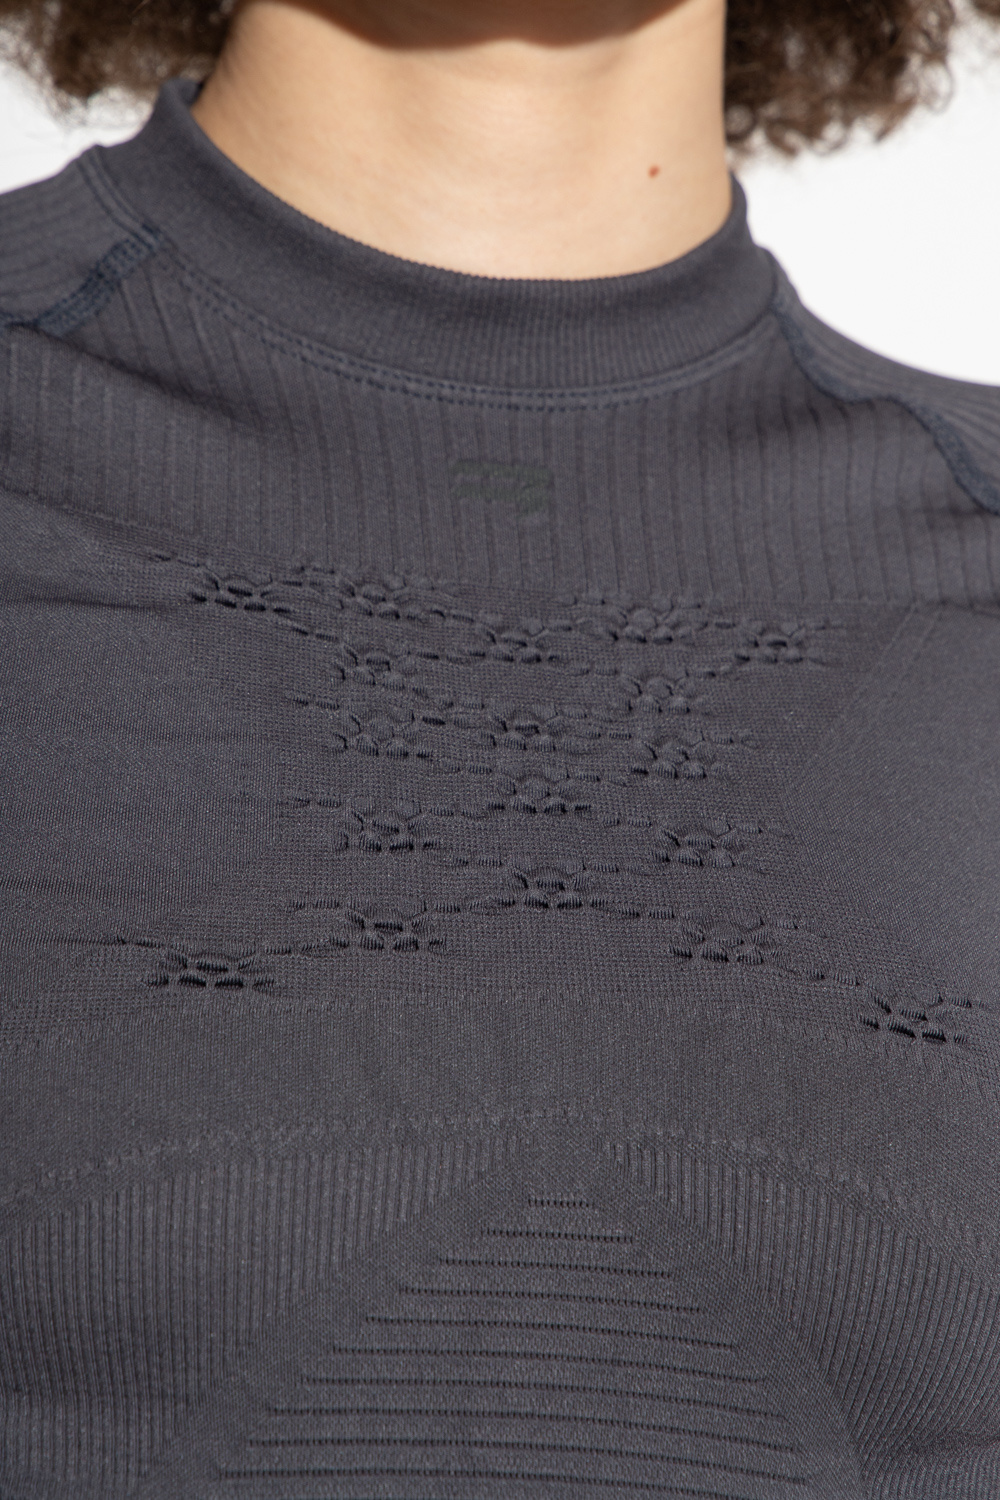 Balenciaga Black linen round neck T-shirt from LARDINI featuring round neck